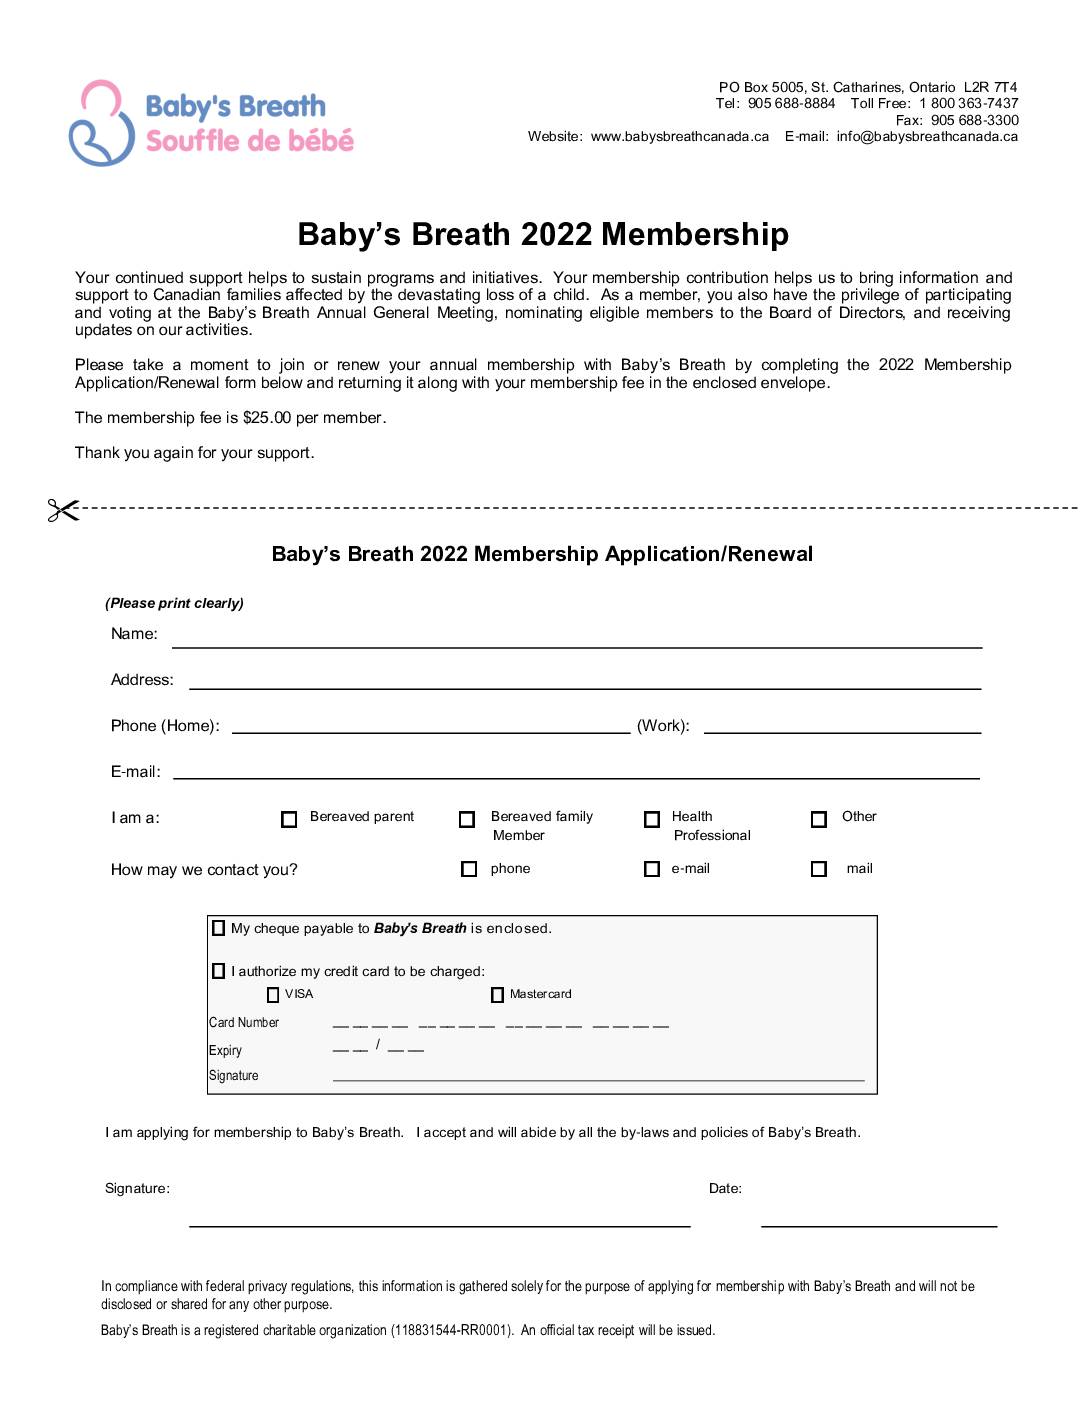 Baby’s Breath Membership Form 2022